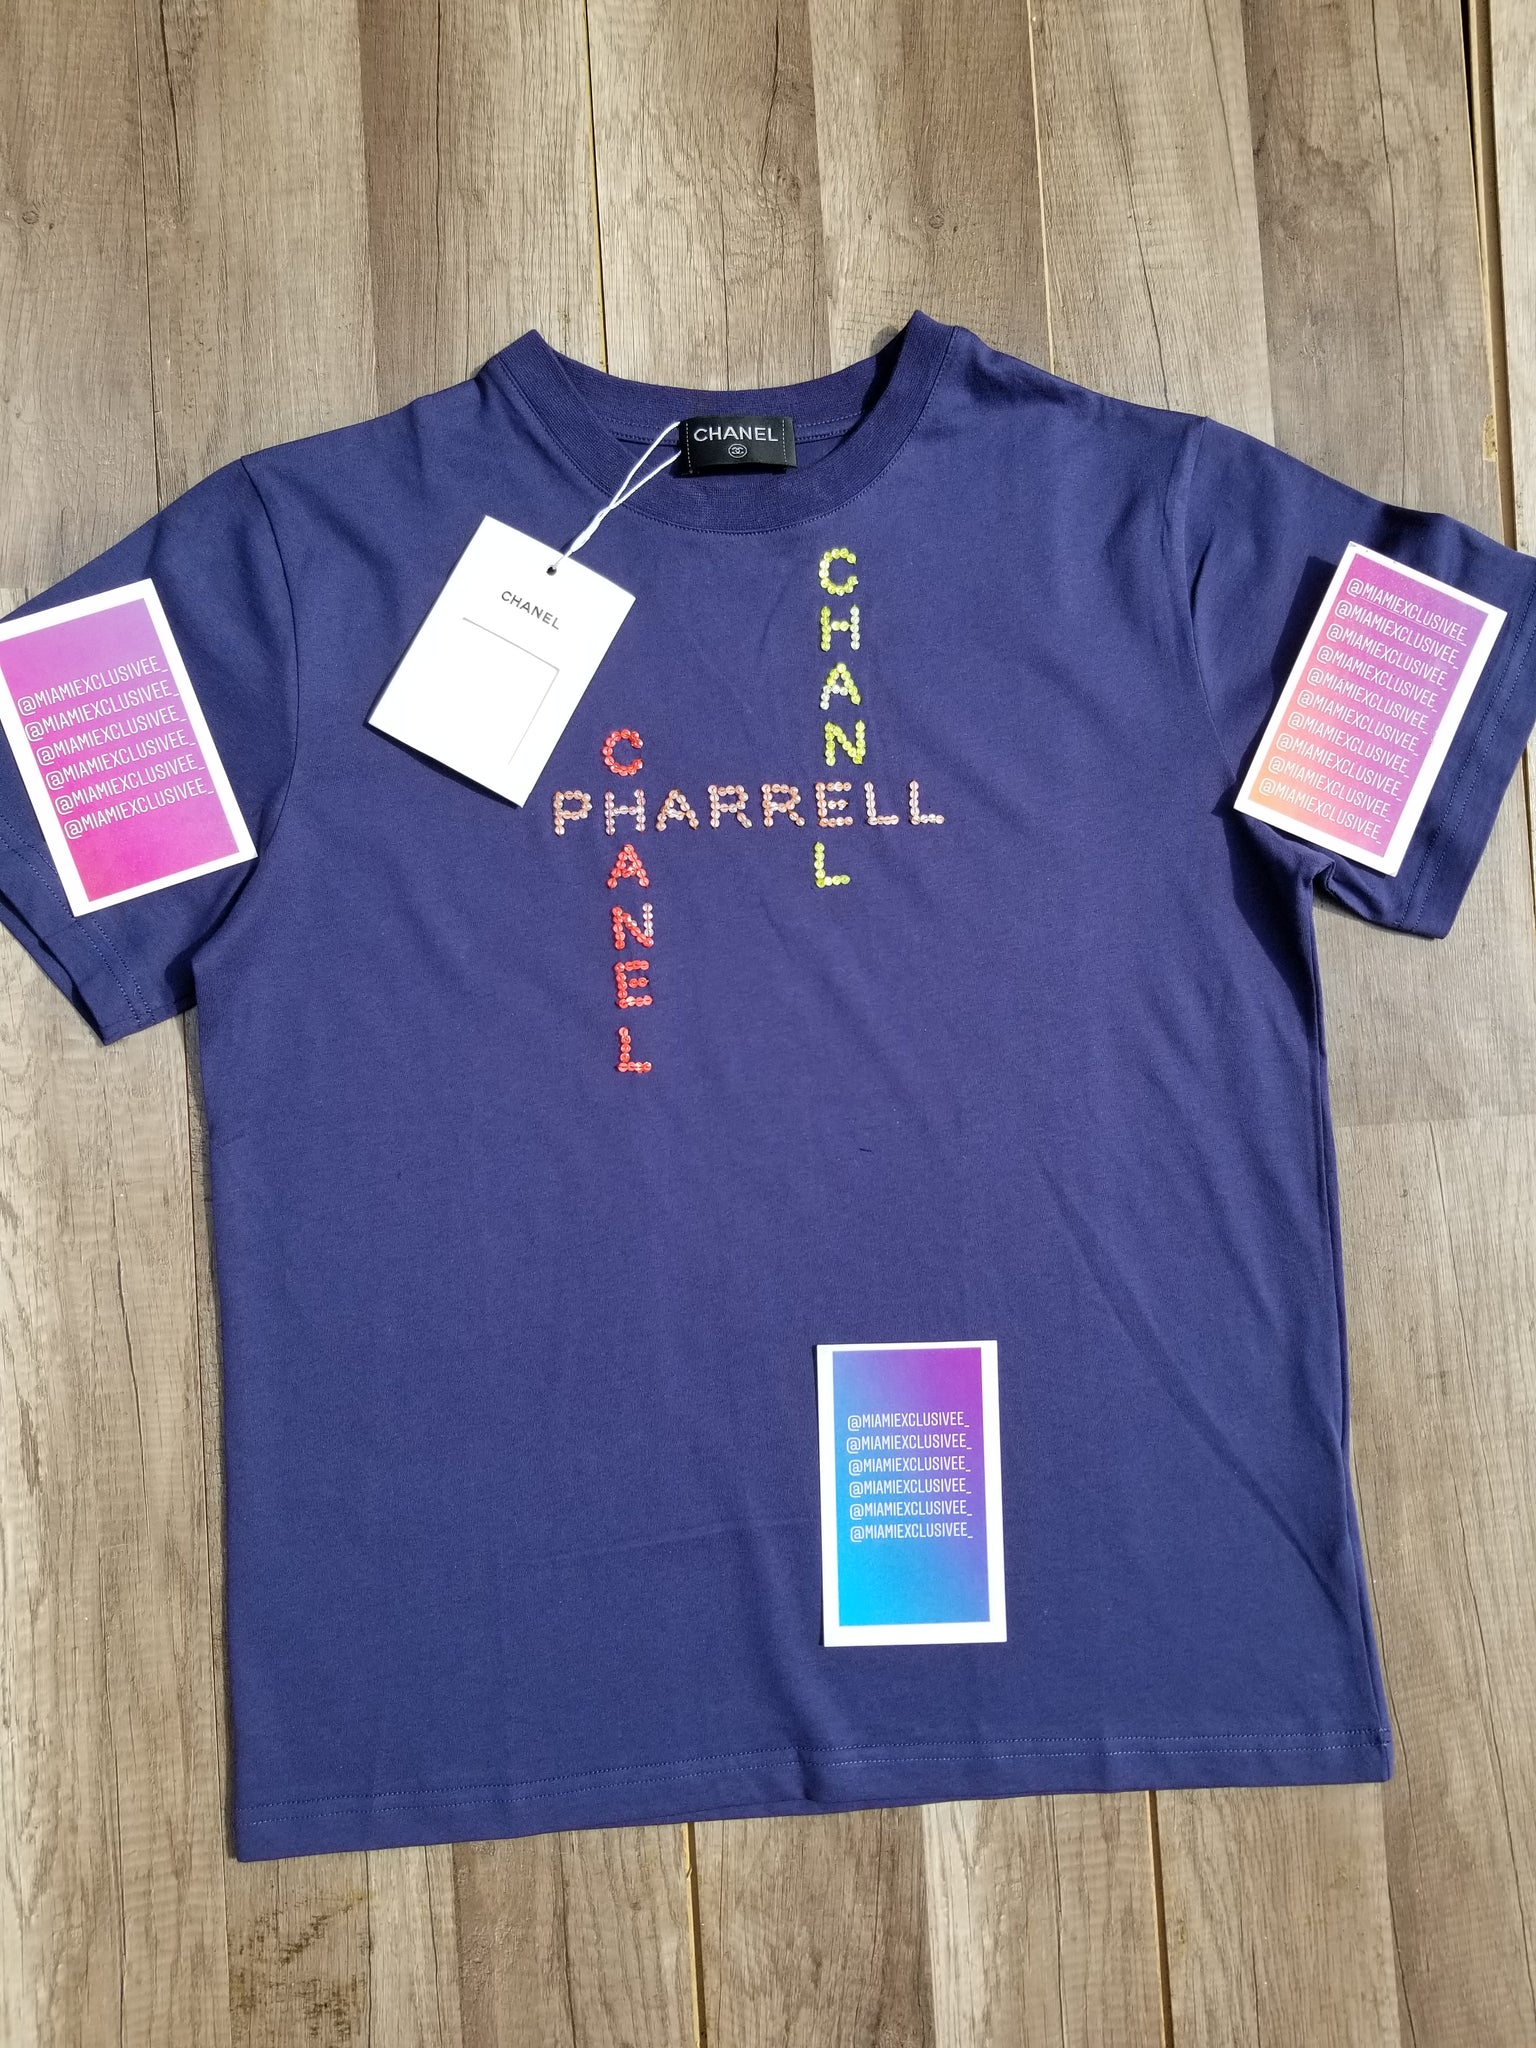 chanel pharrell shirt price